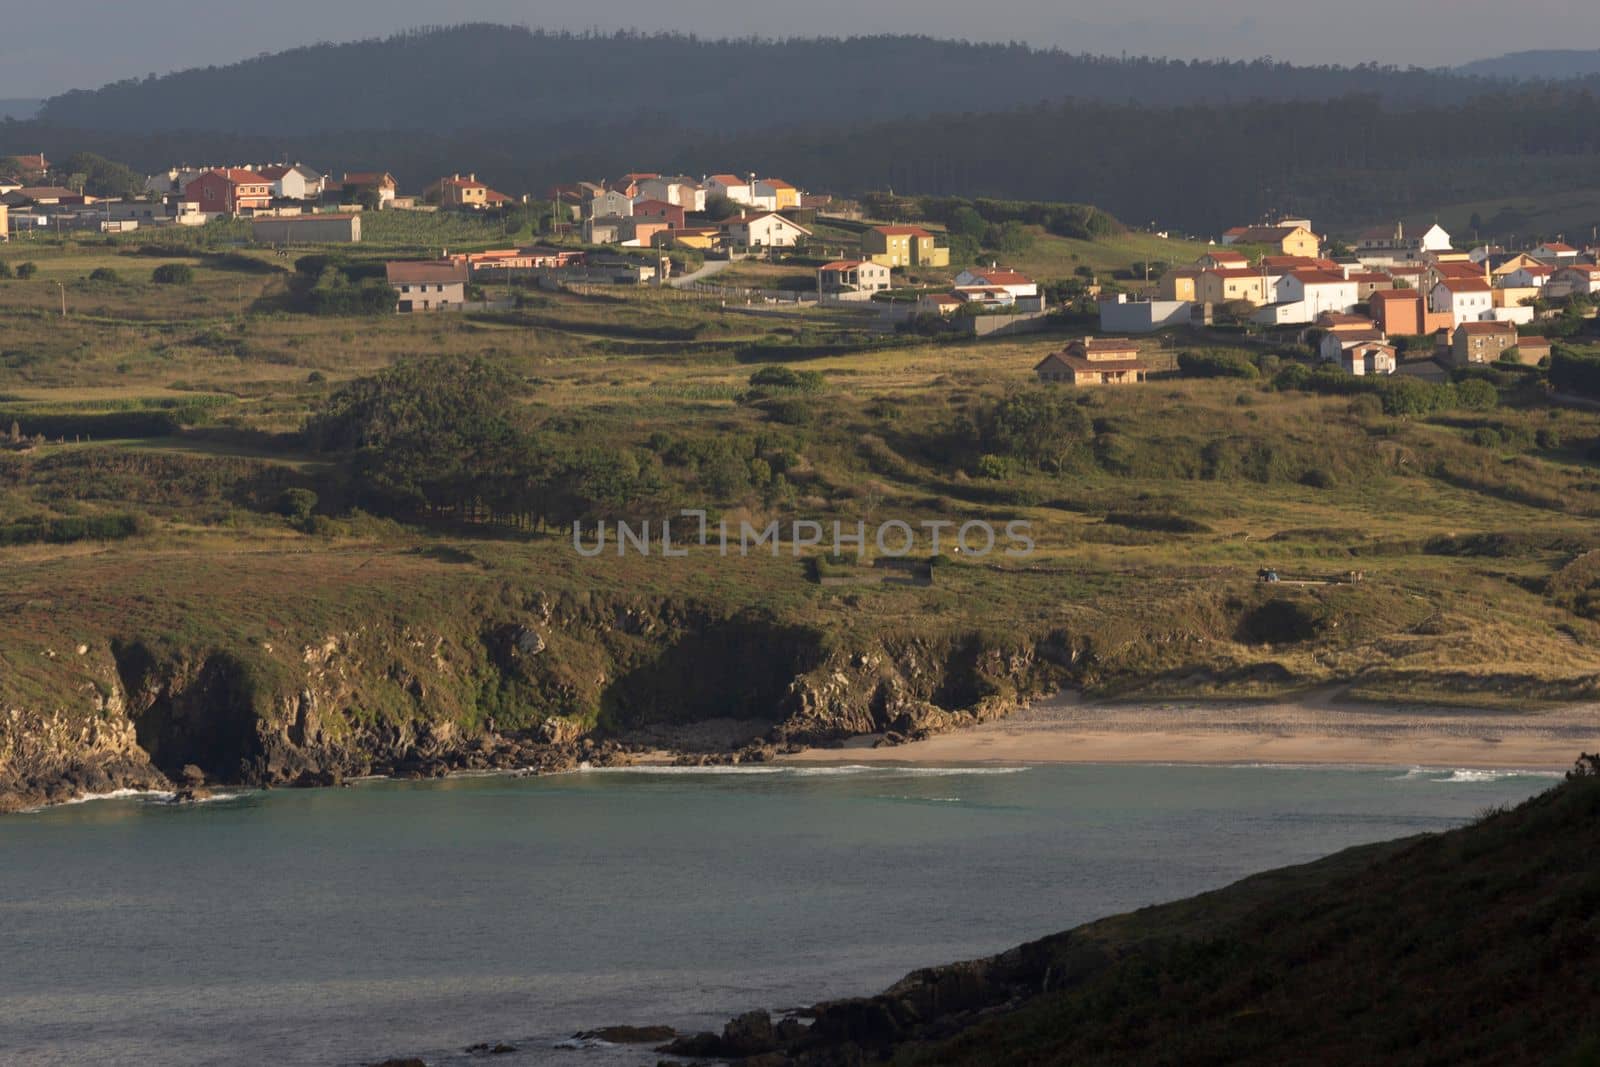 Seaia beach in Malpica de Bergantinos, Galicia by scasal15